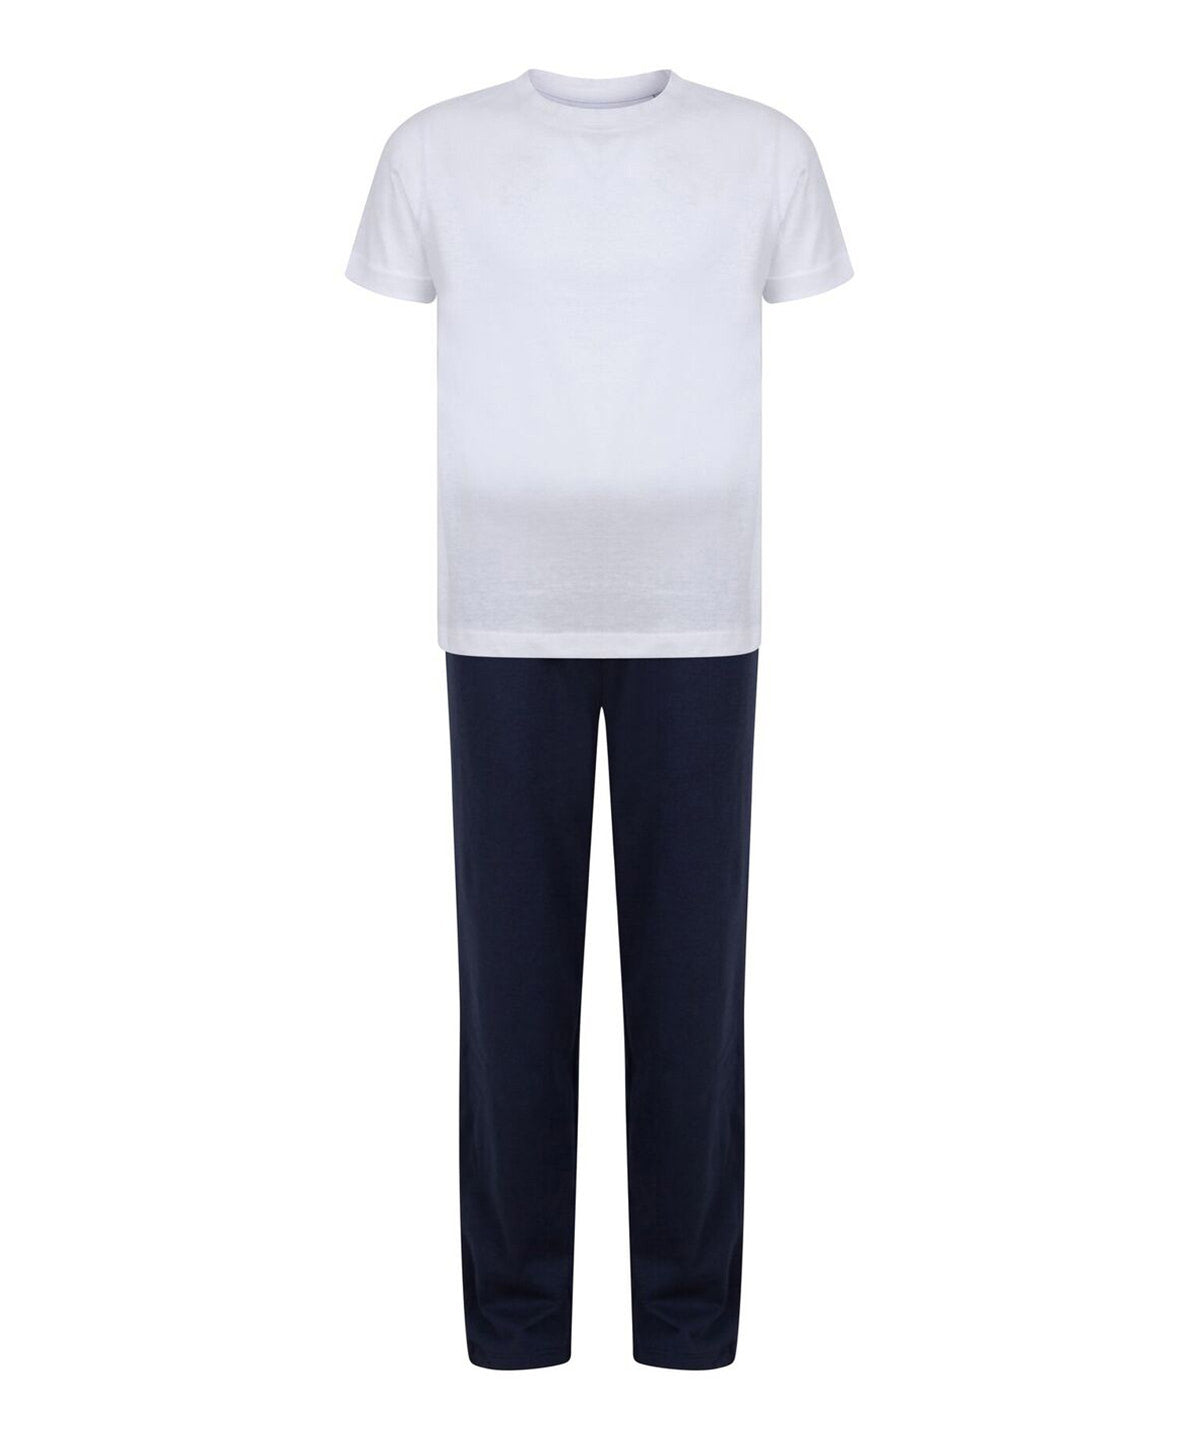 Kids Cotton T Shirt and Long Bottom Pyjamas (Navy or Pink)